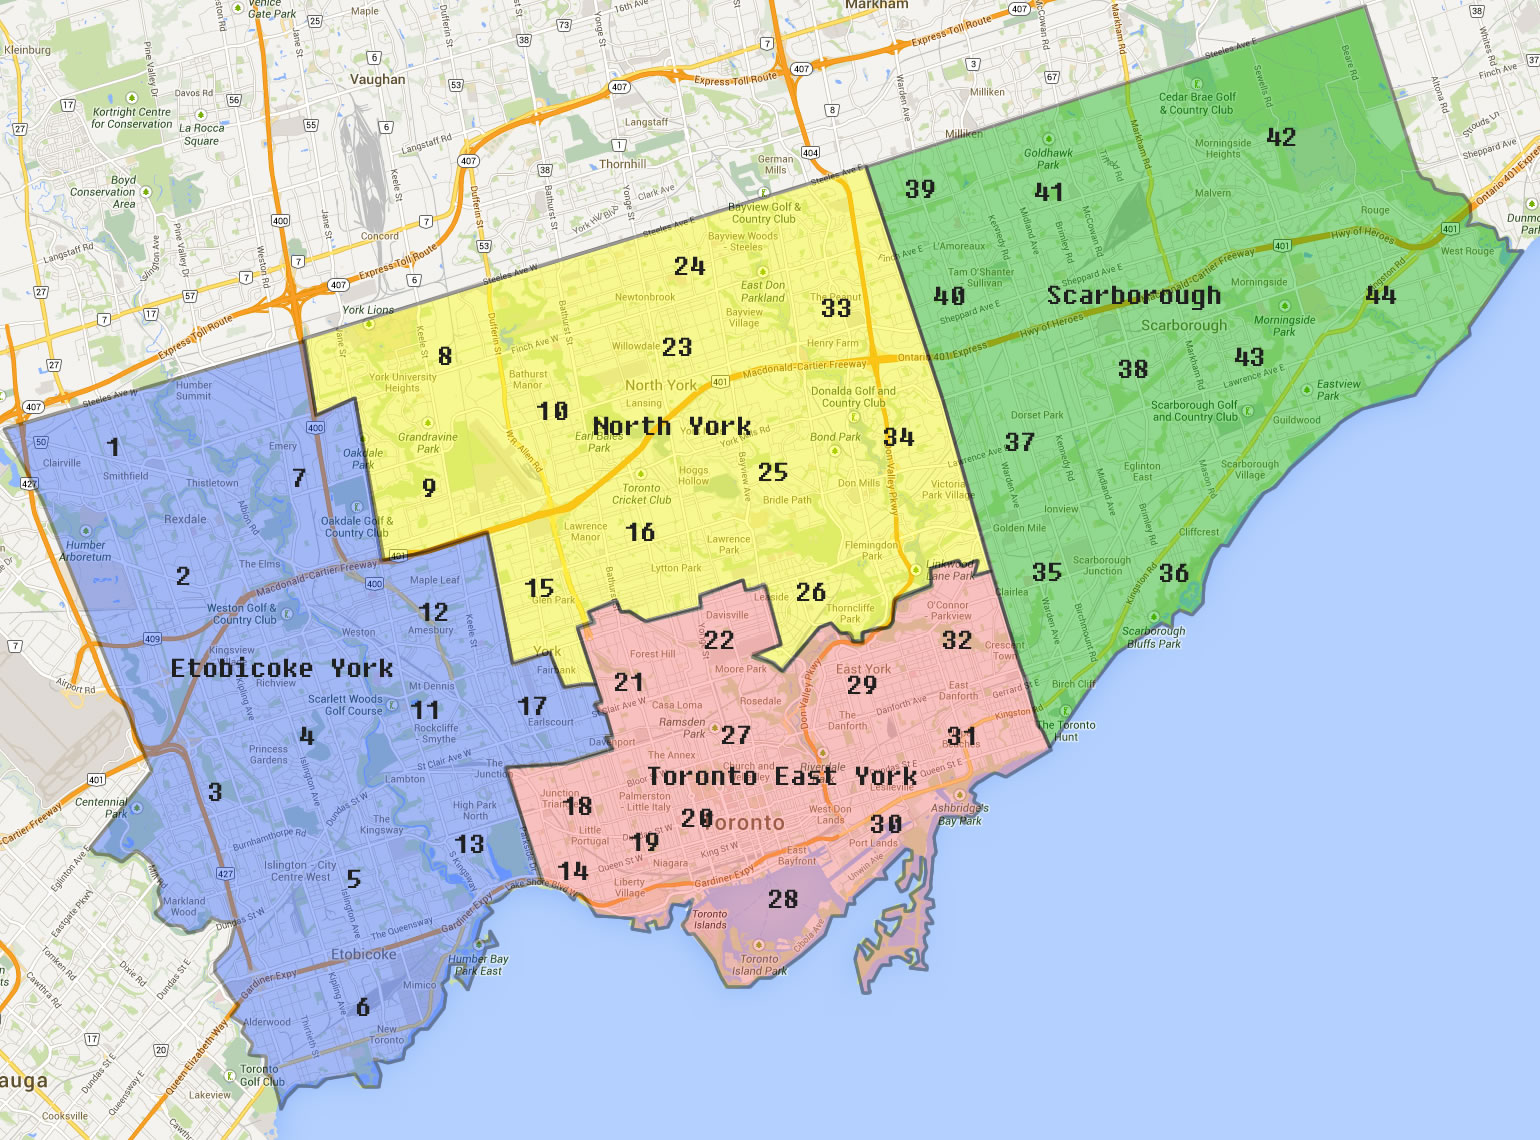 map of Toronto